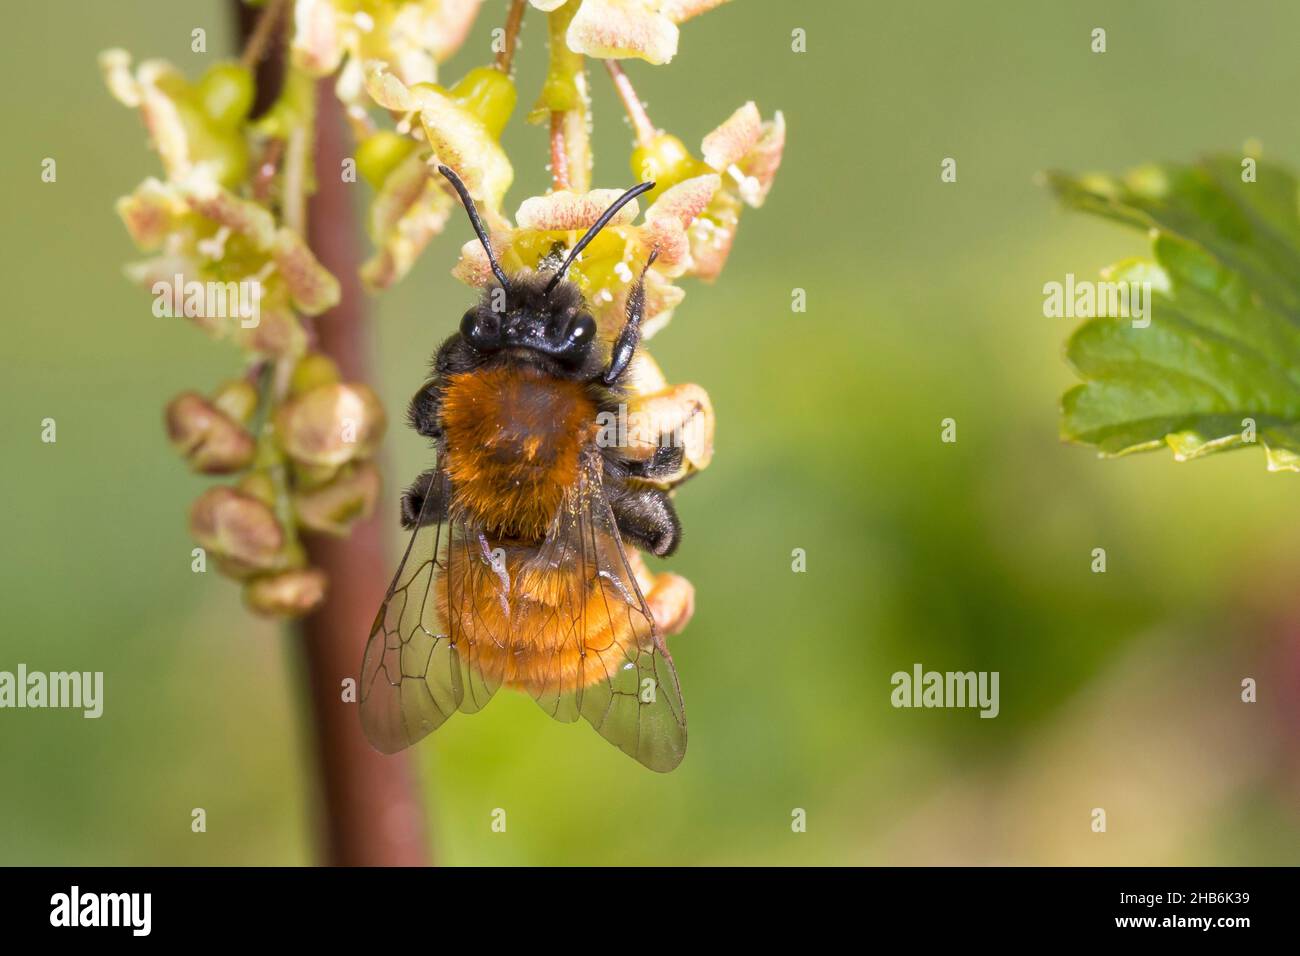 Abeja de madriguera, abeja minera de Tawny, abeja minera de Tawny (Andrena fulva, Andrena armata), mujer que visita un arbusto de grosella floreciente, Alemania Foto de stock